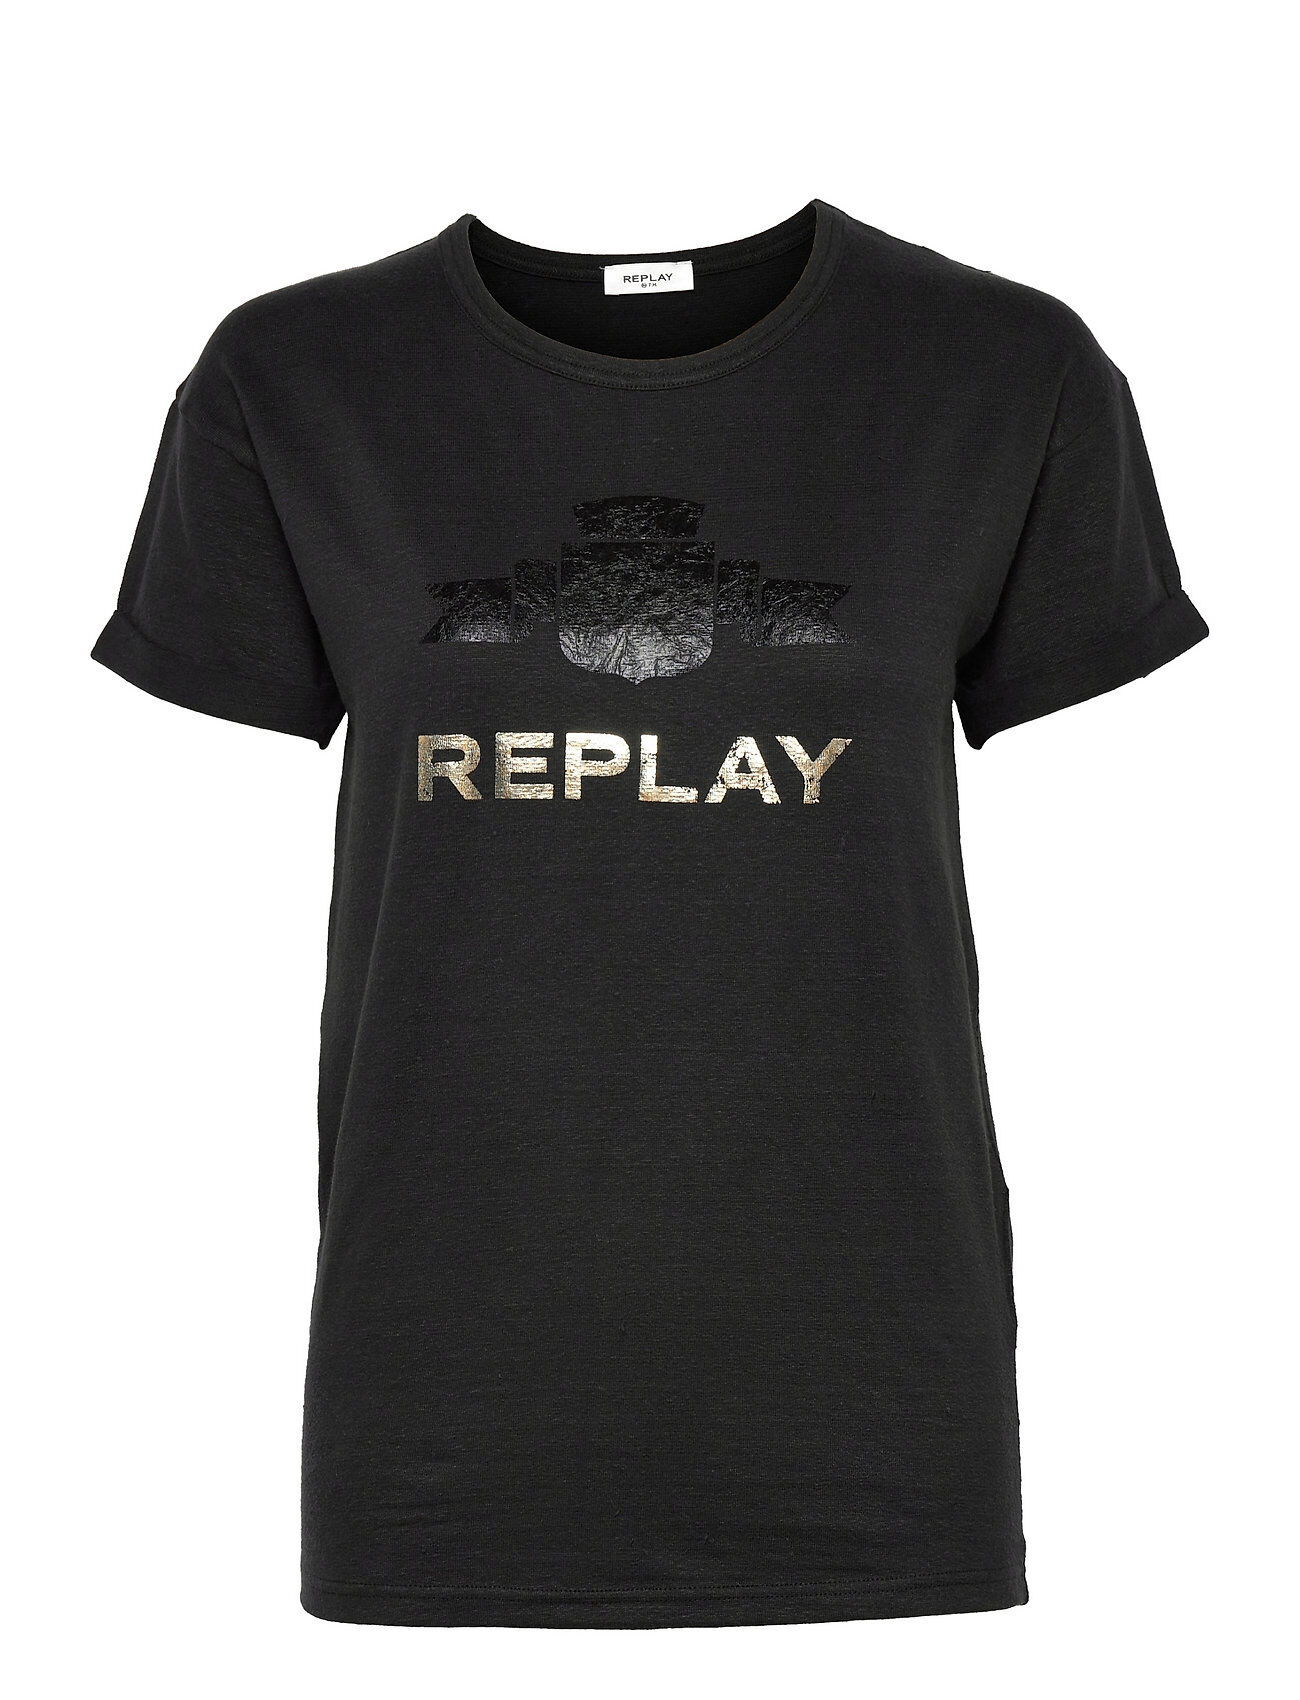 Replay T-Shirt T-shirts & Tops Short-sleeved Svart Replay